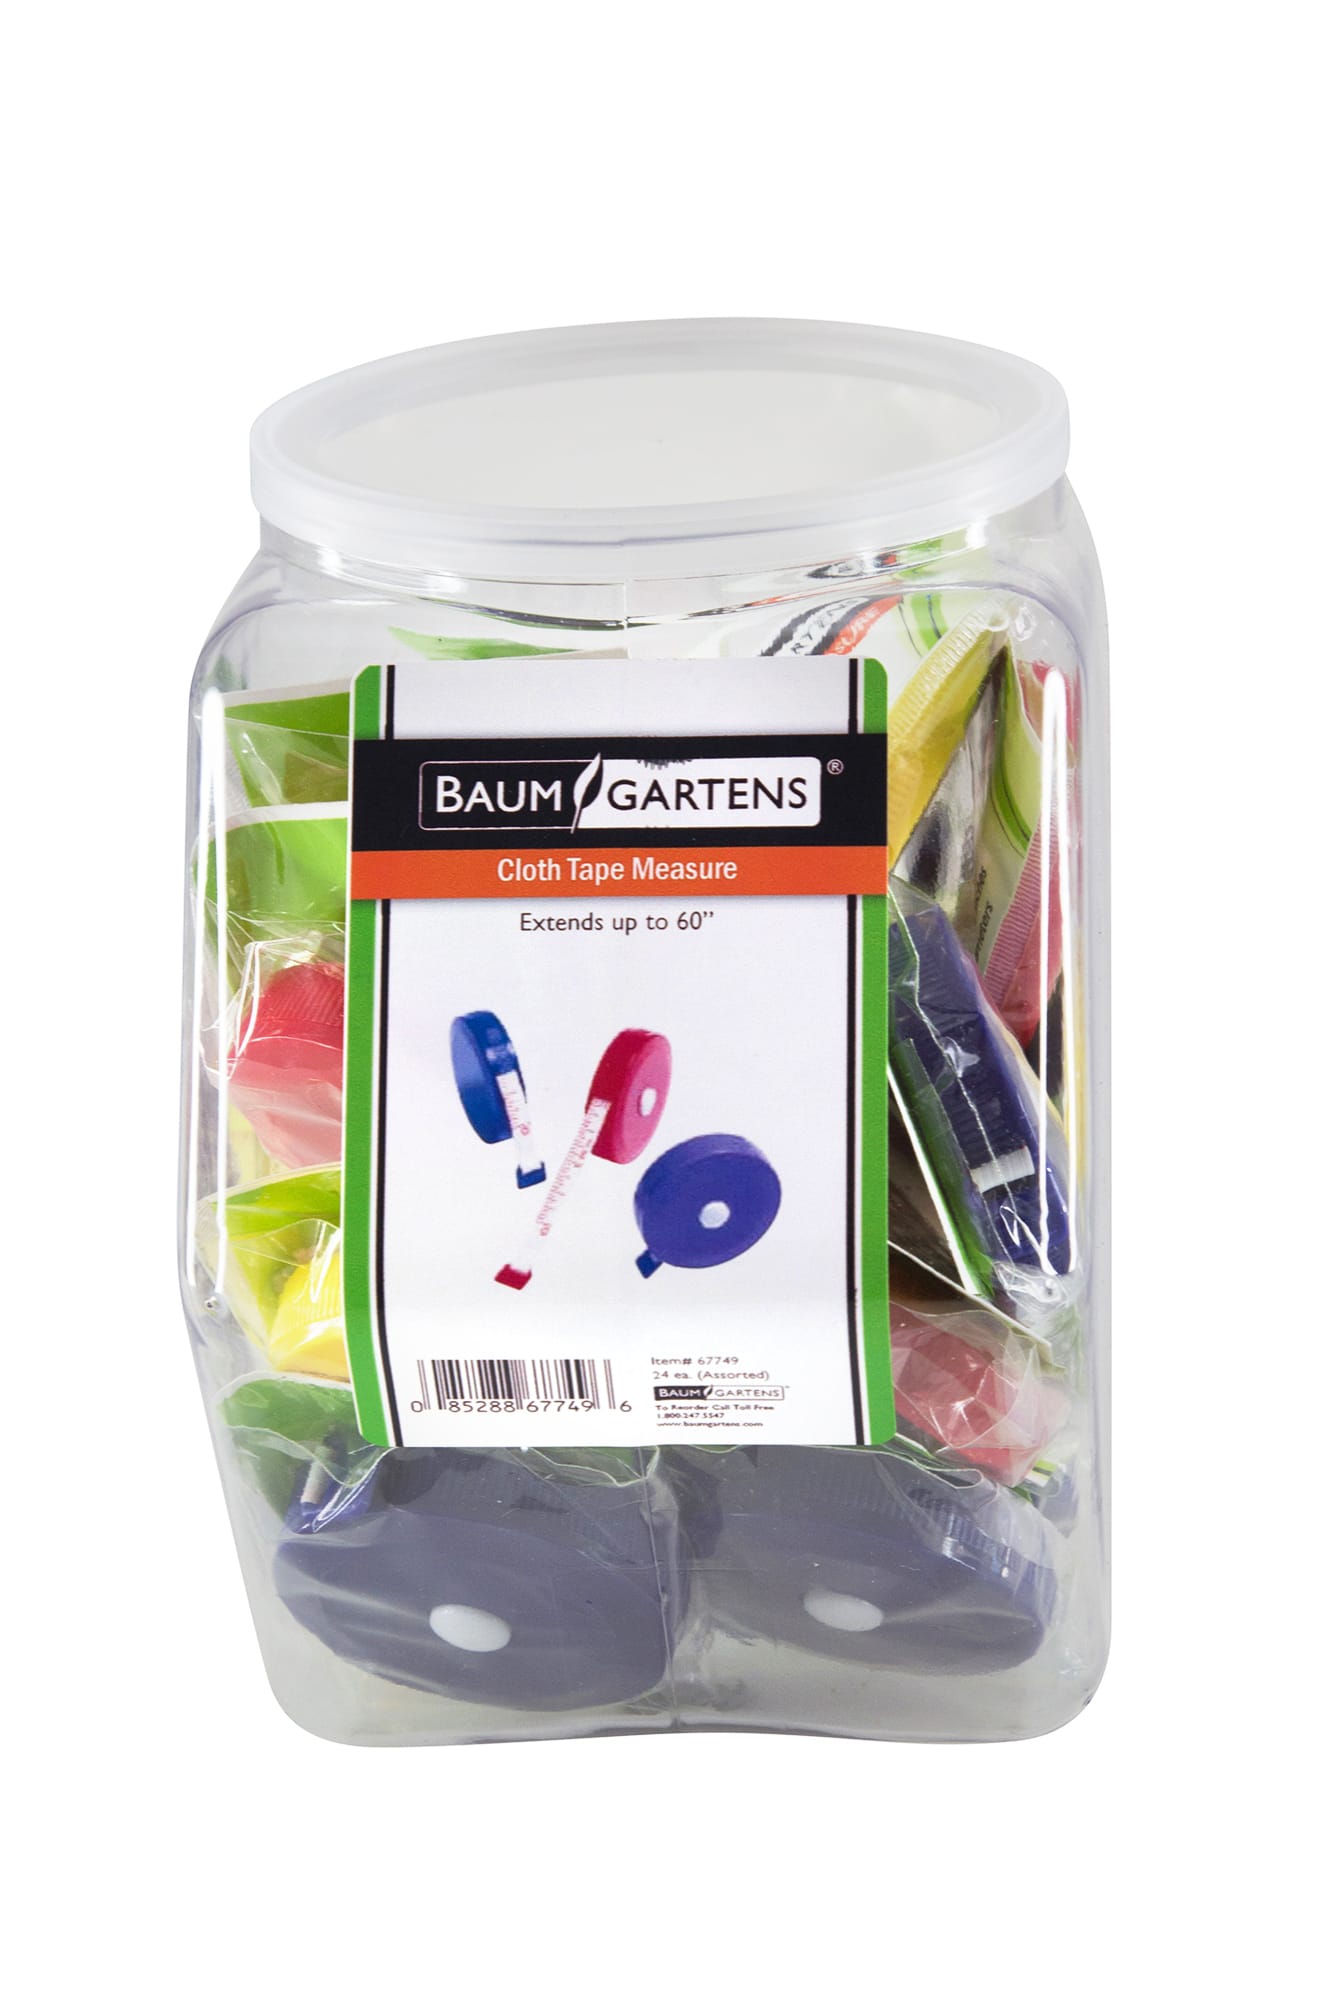 Baumgartens Fabric Tape Measure Hexagonal Tub Display of 24 ASSORTED Colors (67749)